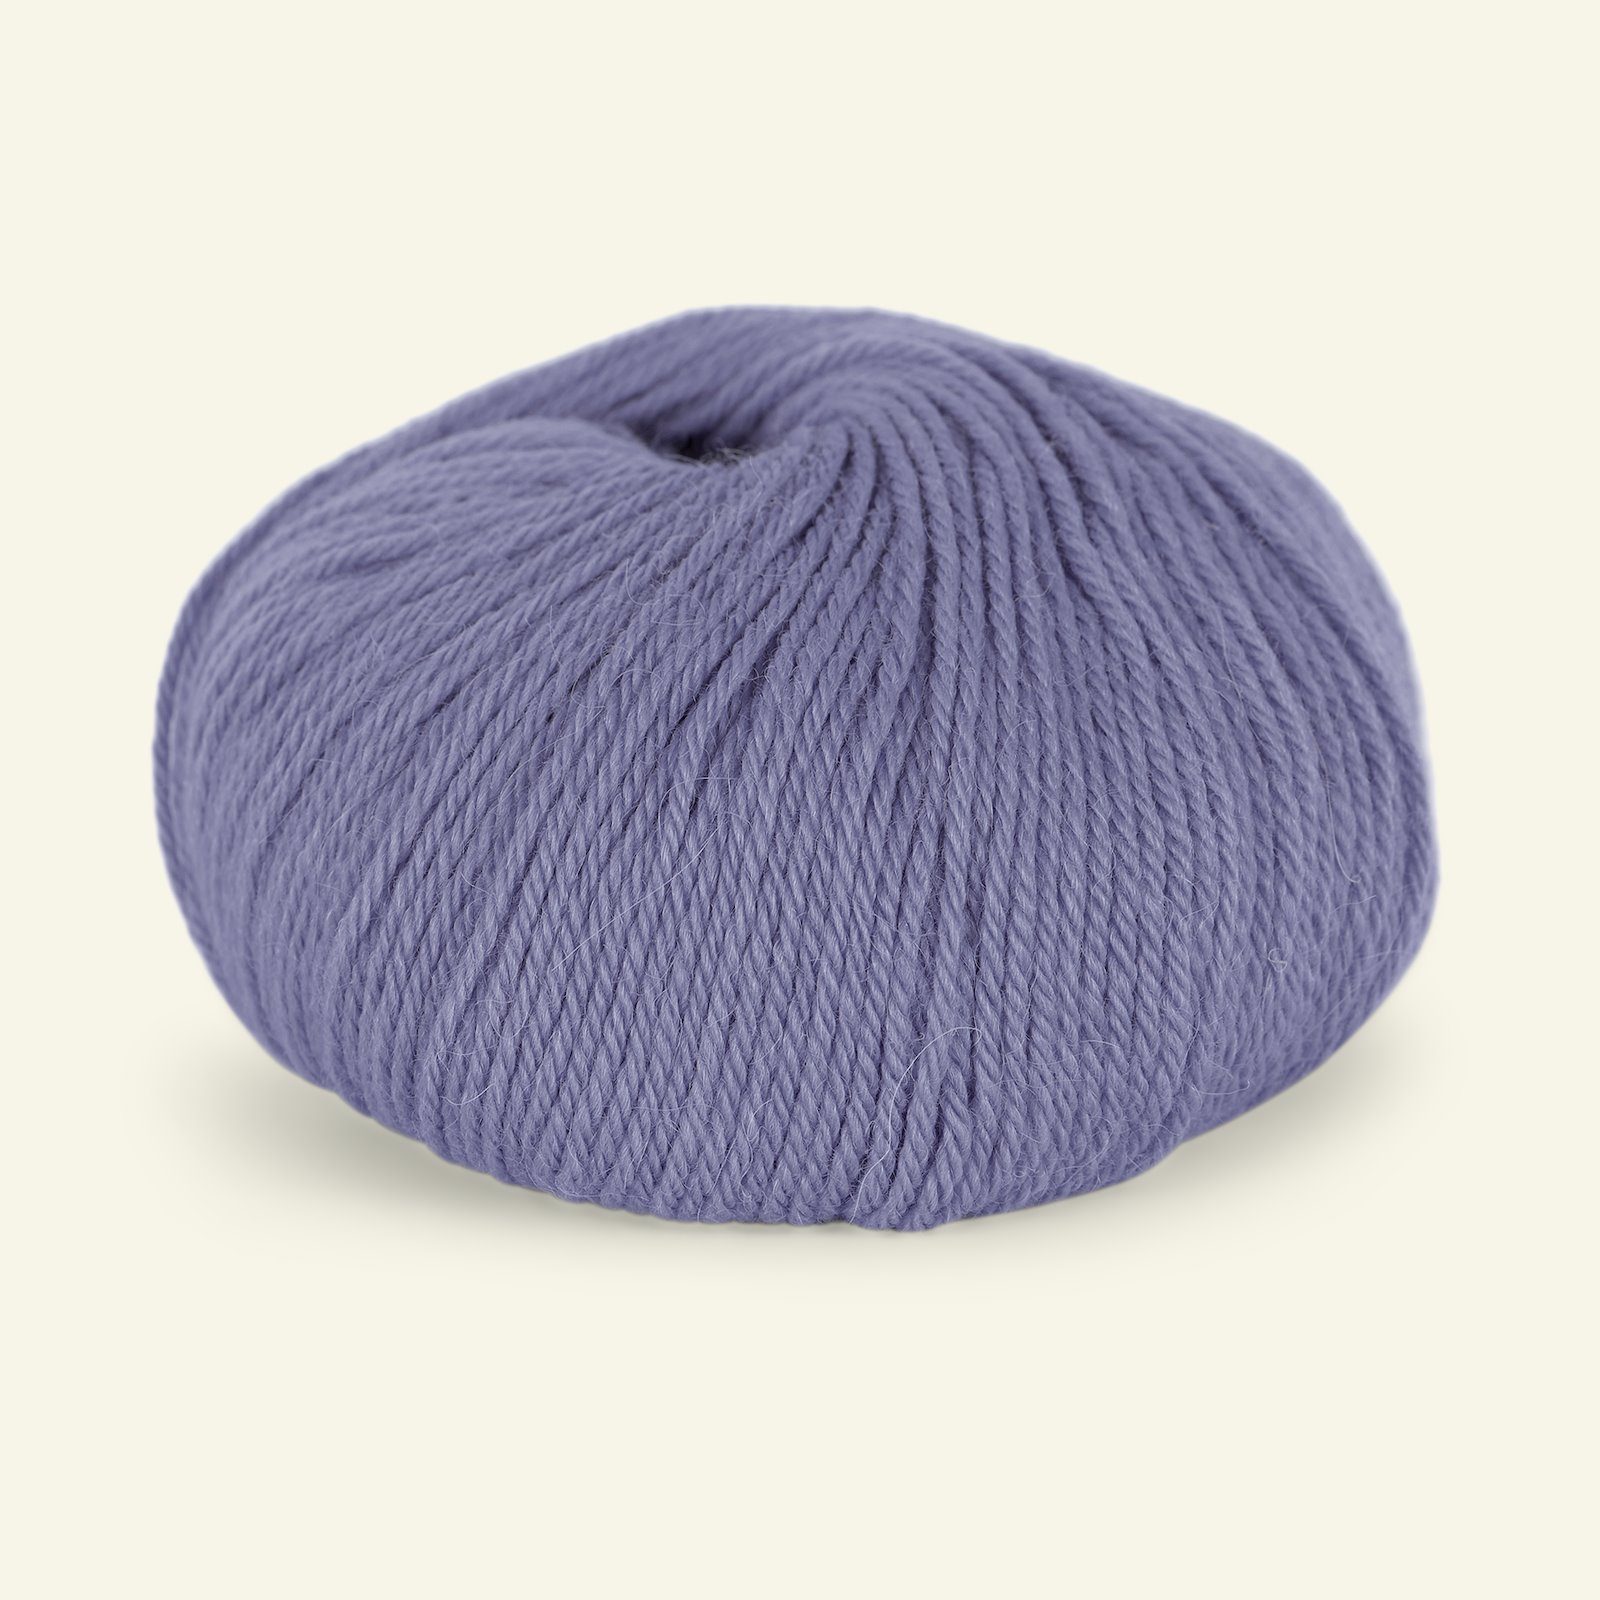 Du Store Alpakka, alpaca merino mixed yarn "Sterk", lavender (909) 90000701_pack_b